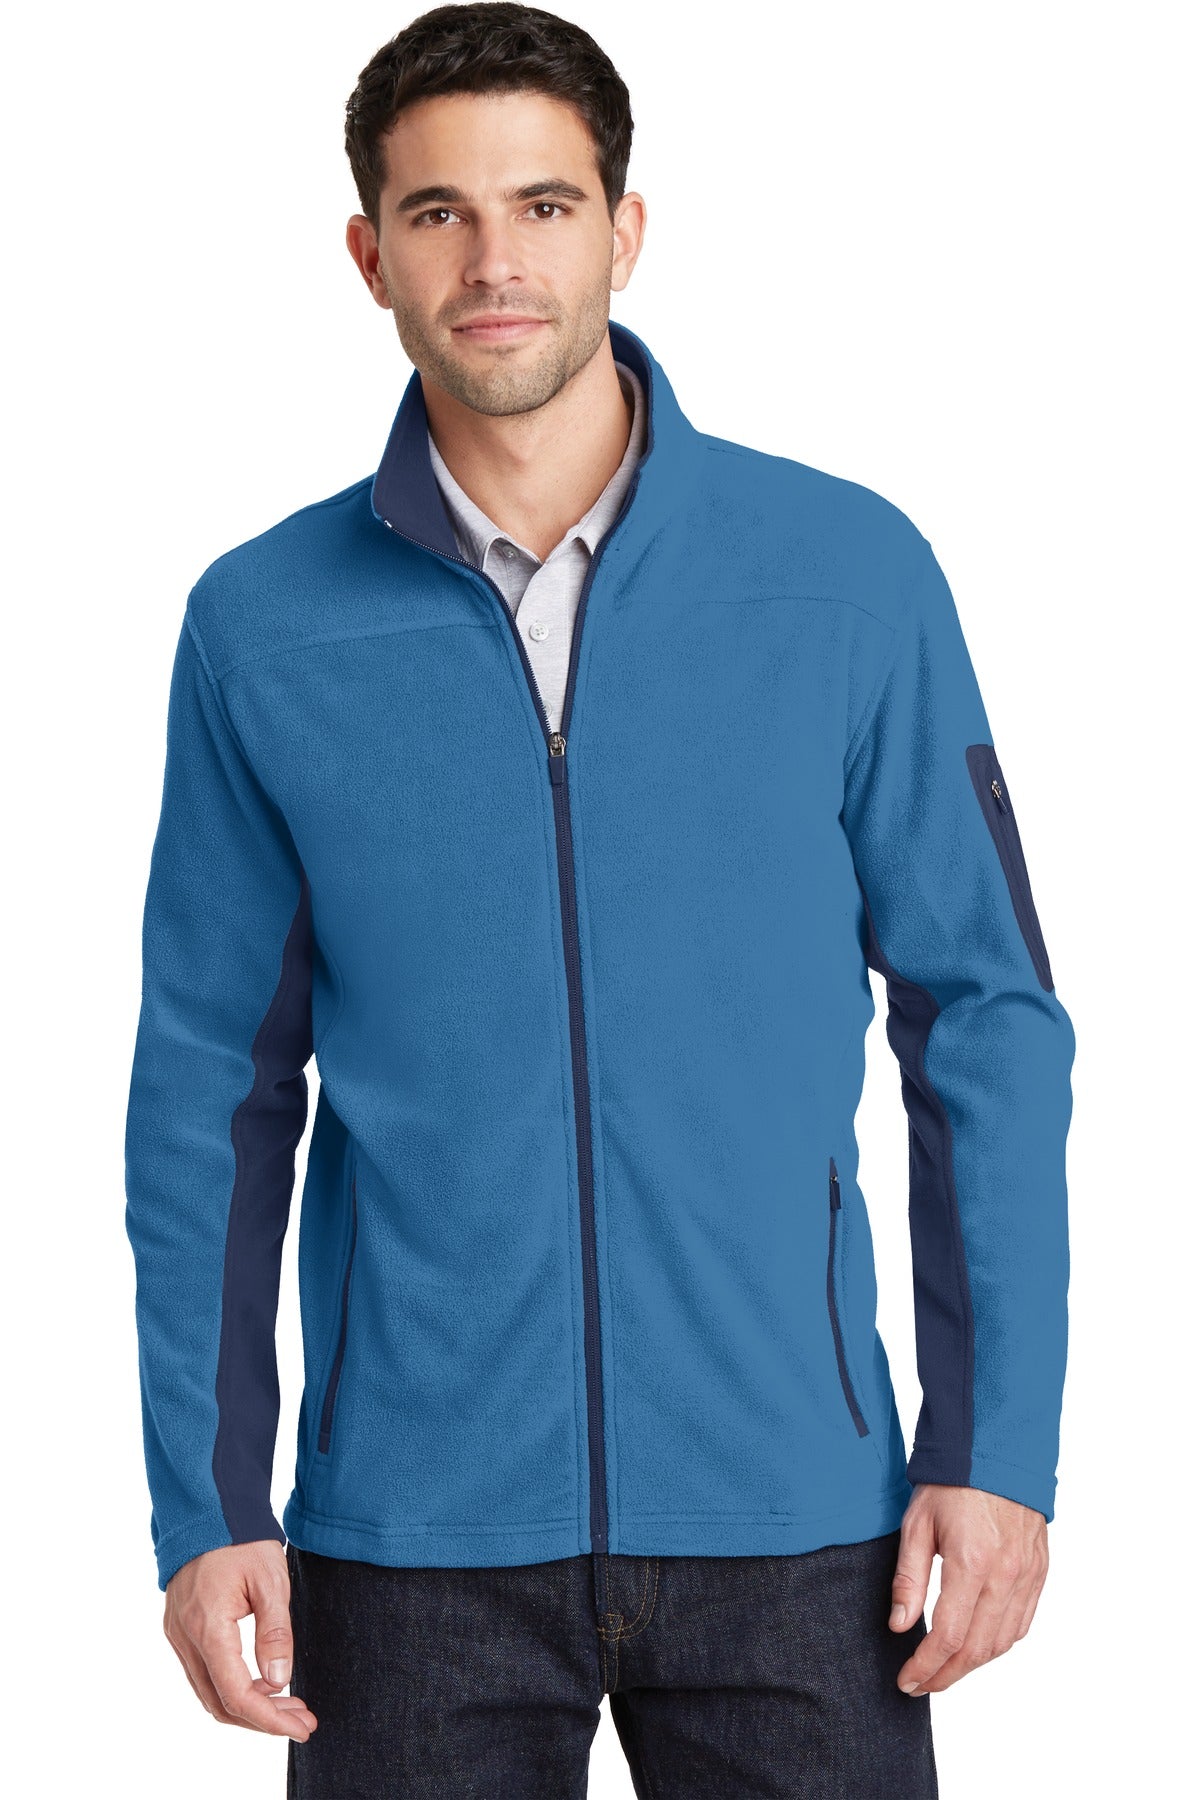 Custom Embroidered - Port Authority® Summit Fleece Full-Zip Jacket. F233